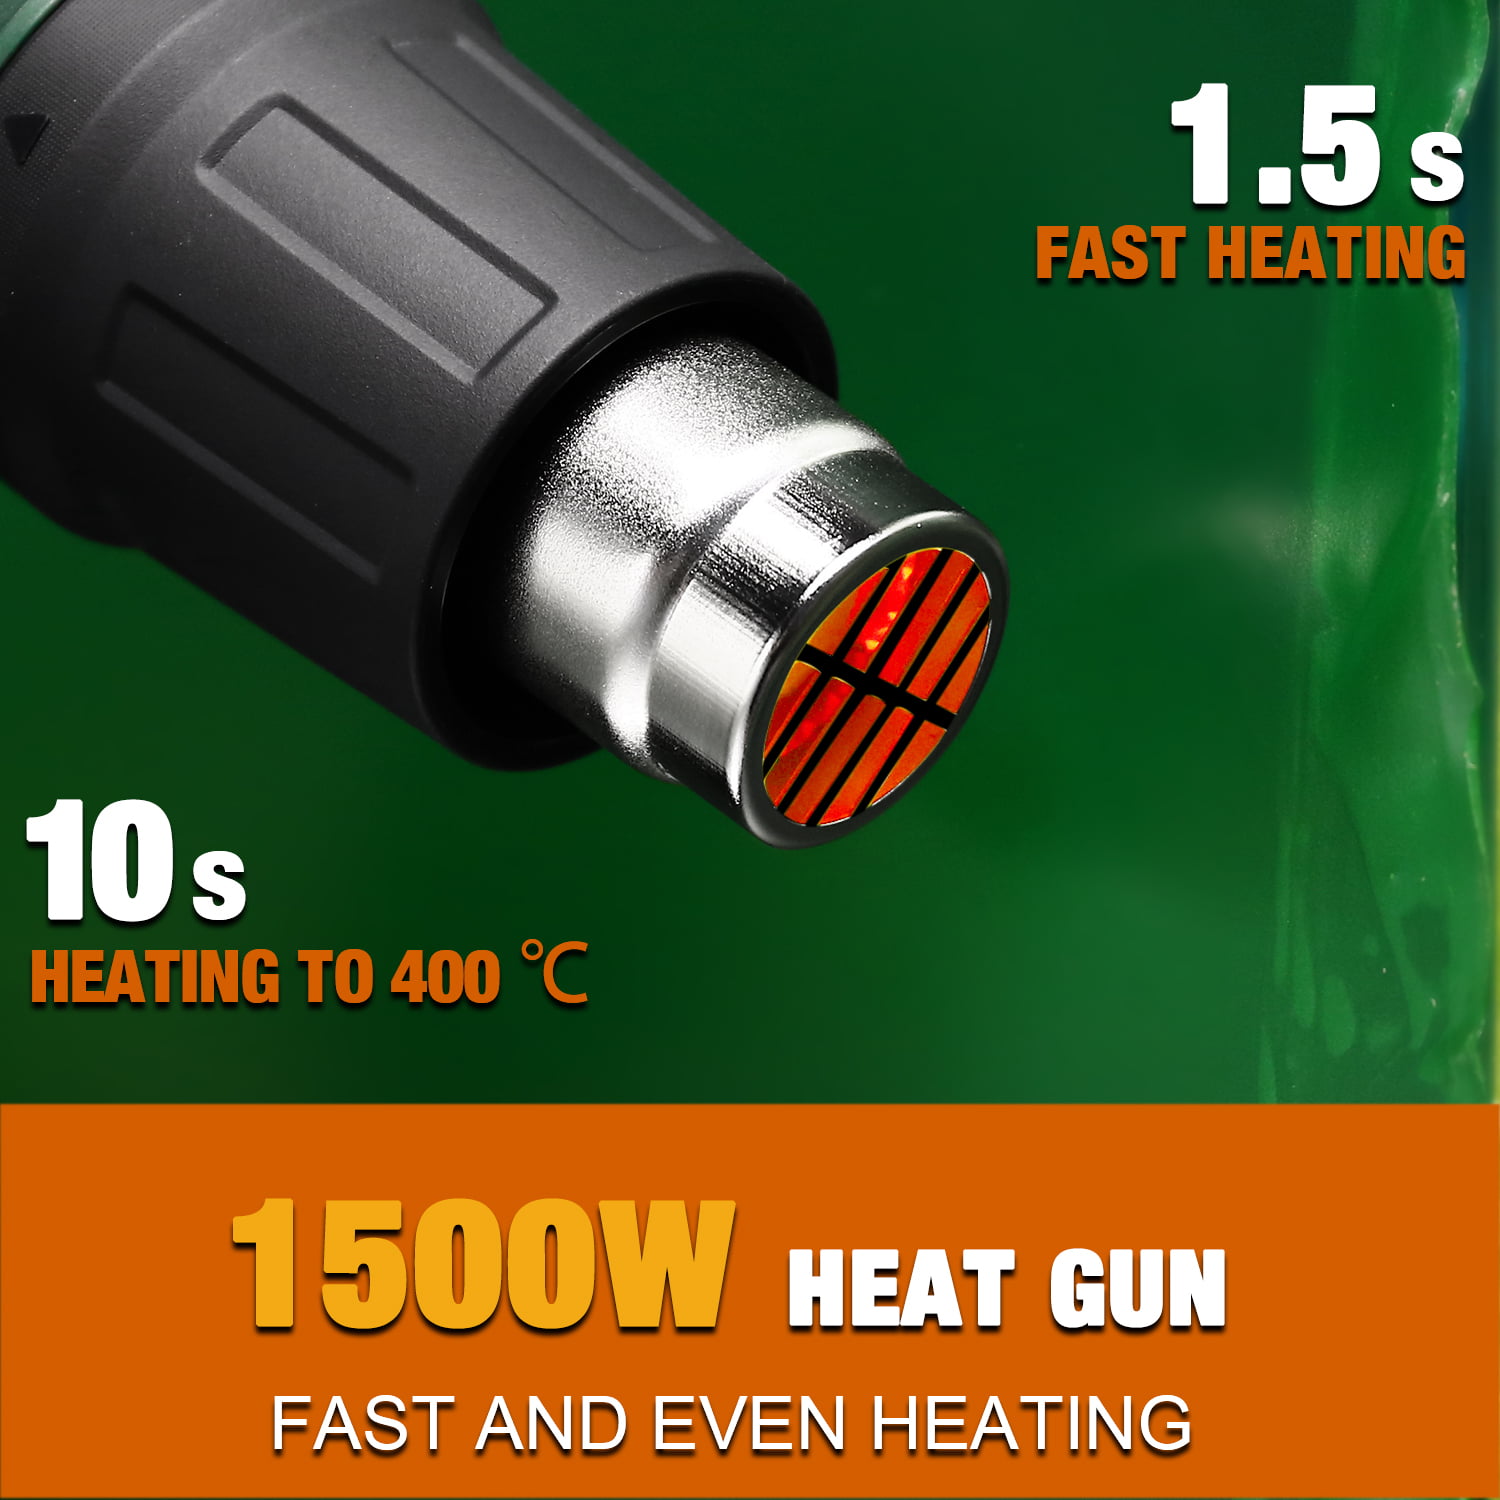 1,500 W Dial-Control Heat Gun